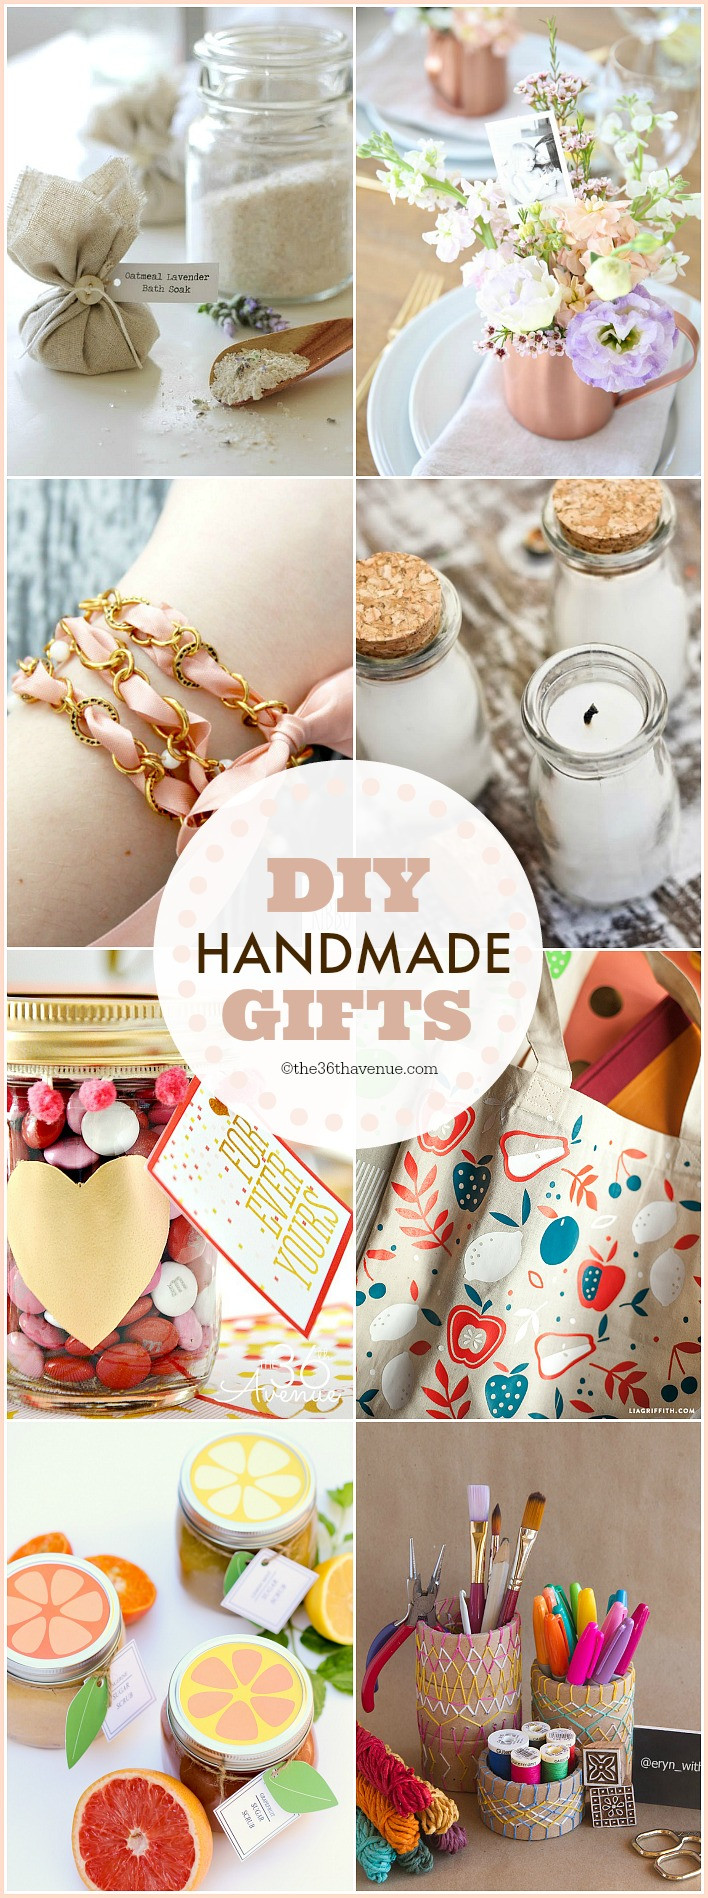 Handmade Birthday Gift Ideas
 100 Handmade Gifts Under Five Dollars